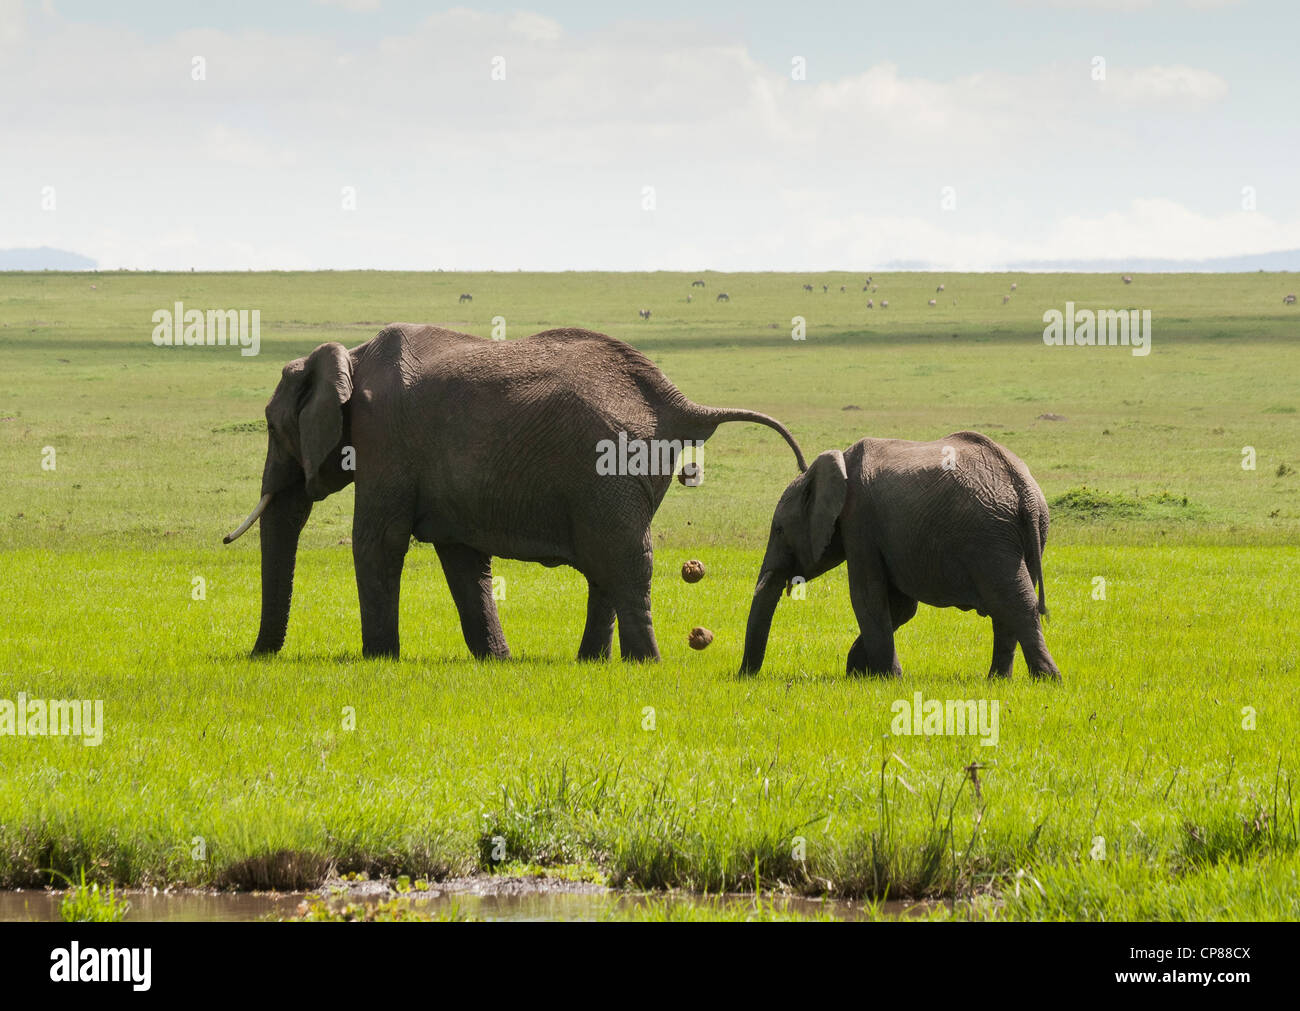 Afrikanischen Busch Elefant (Loxodonta africana), Mutter und Kalb. Mutter pooing in der Masai Mara National Reserve, Kenia, Afrika Stockfoto